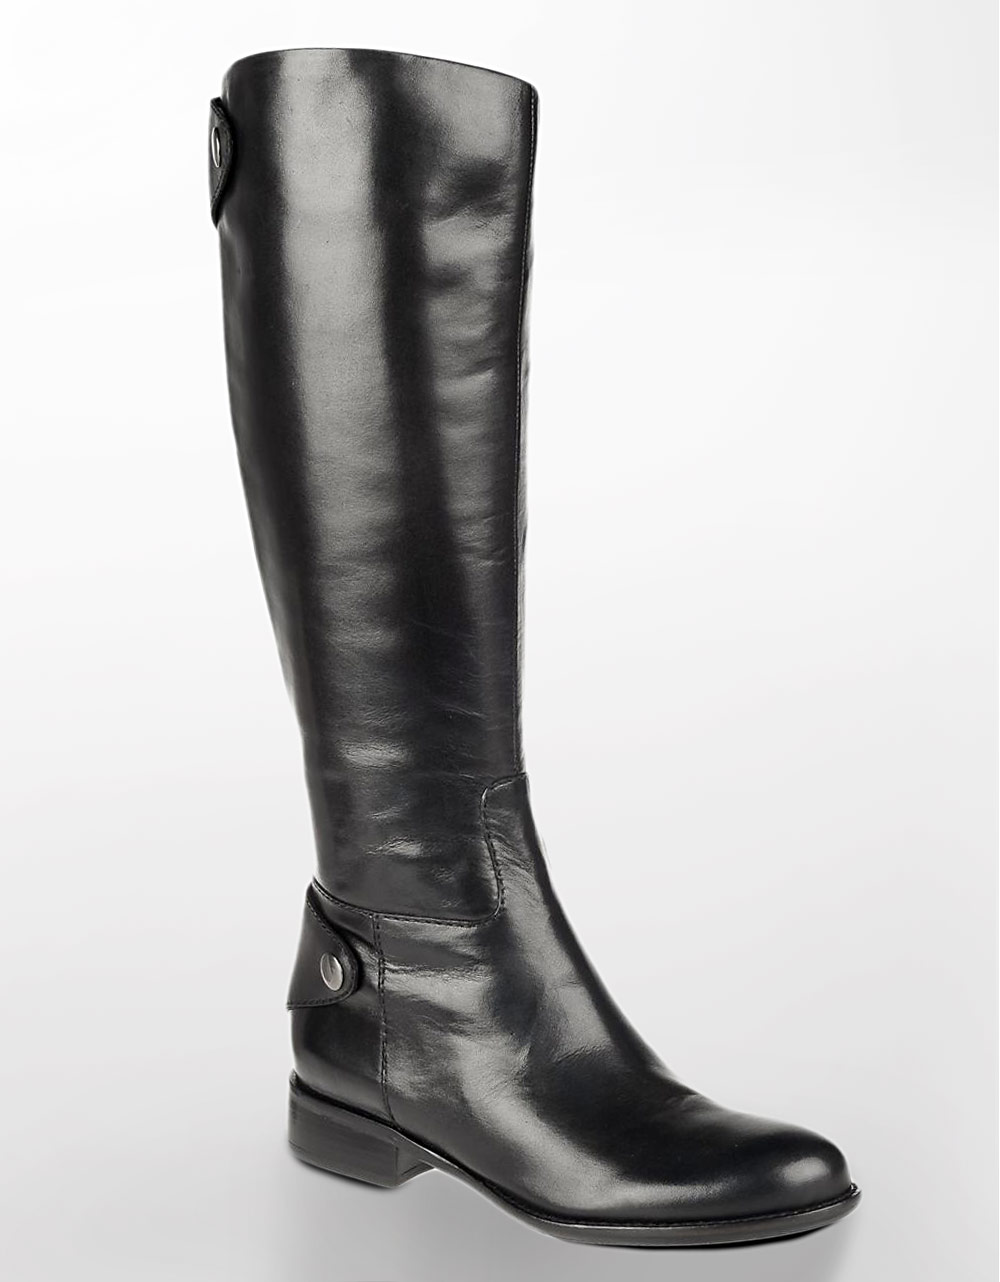 Lyst - Franco Sarto Rivoli Tall Leather Boots in Black